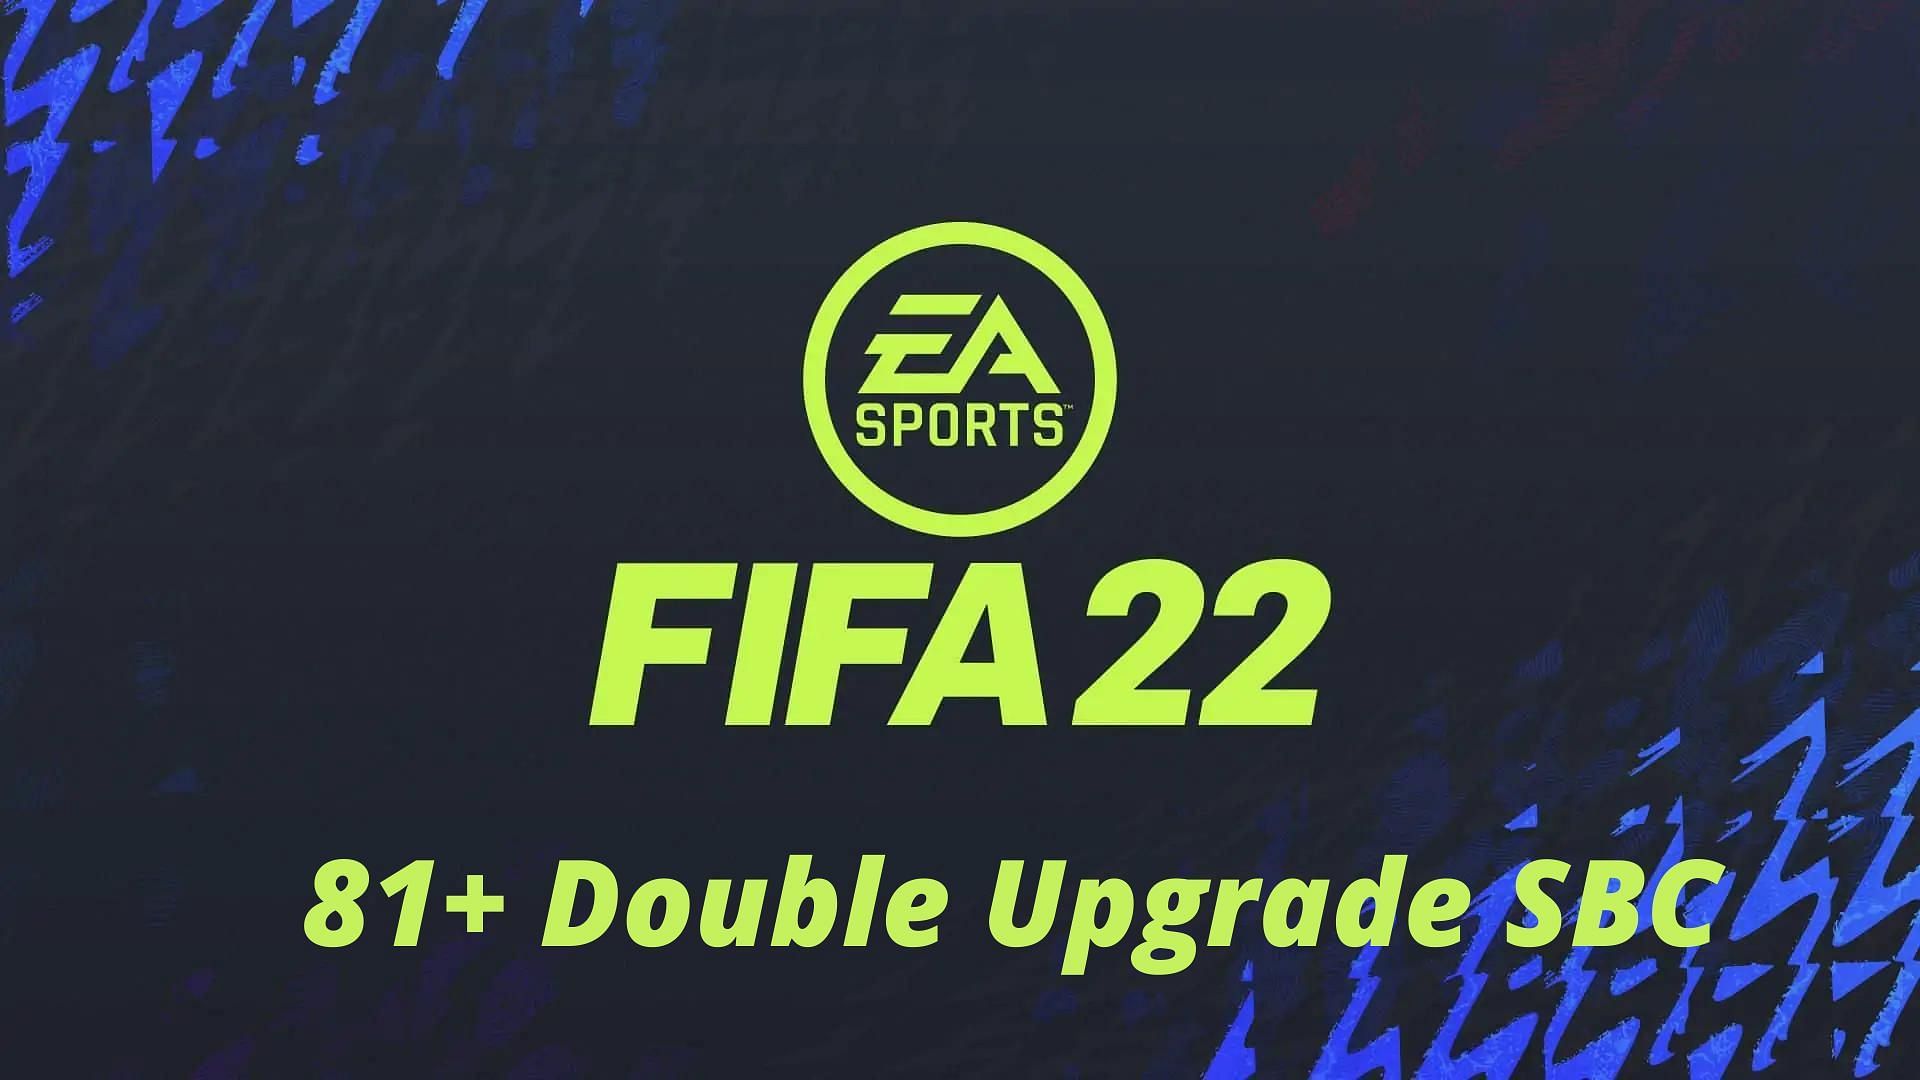 81+ Double Upgrade SBC is live in FIFA 22 (Image via Sportskeeda)